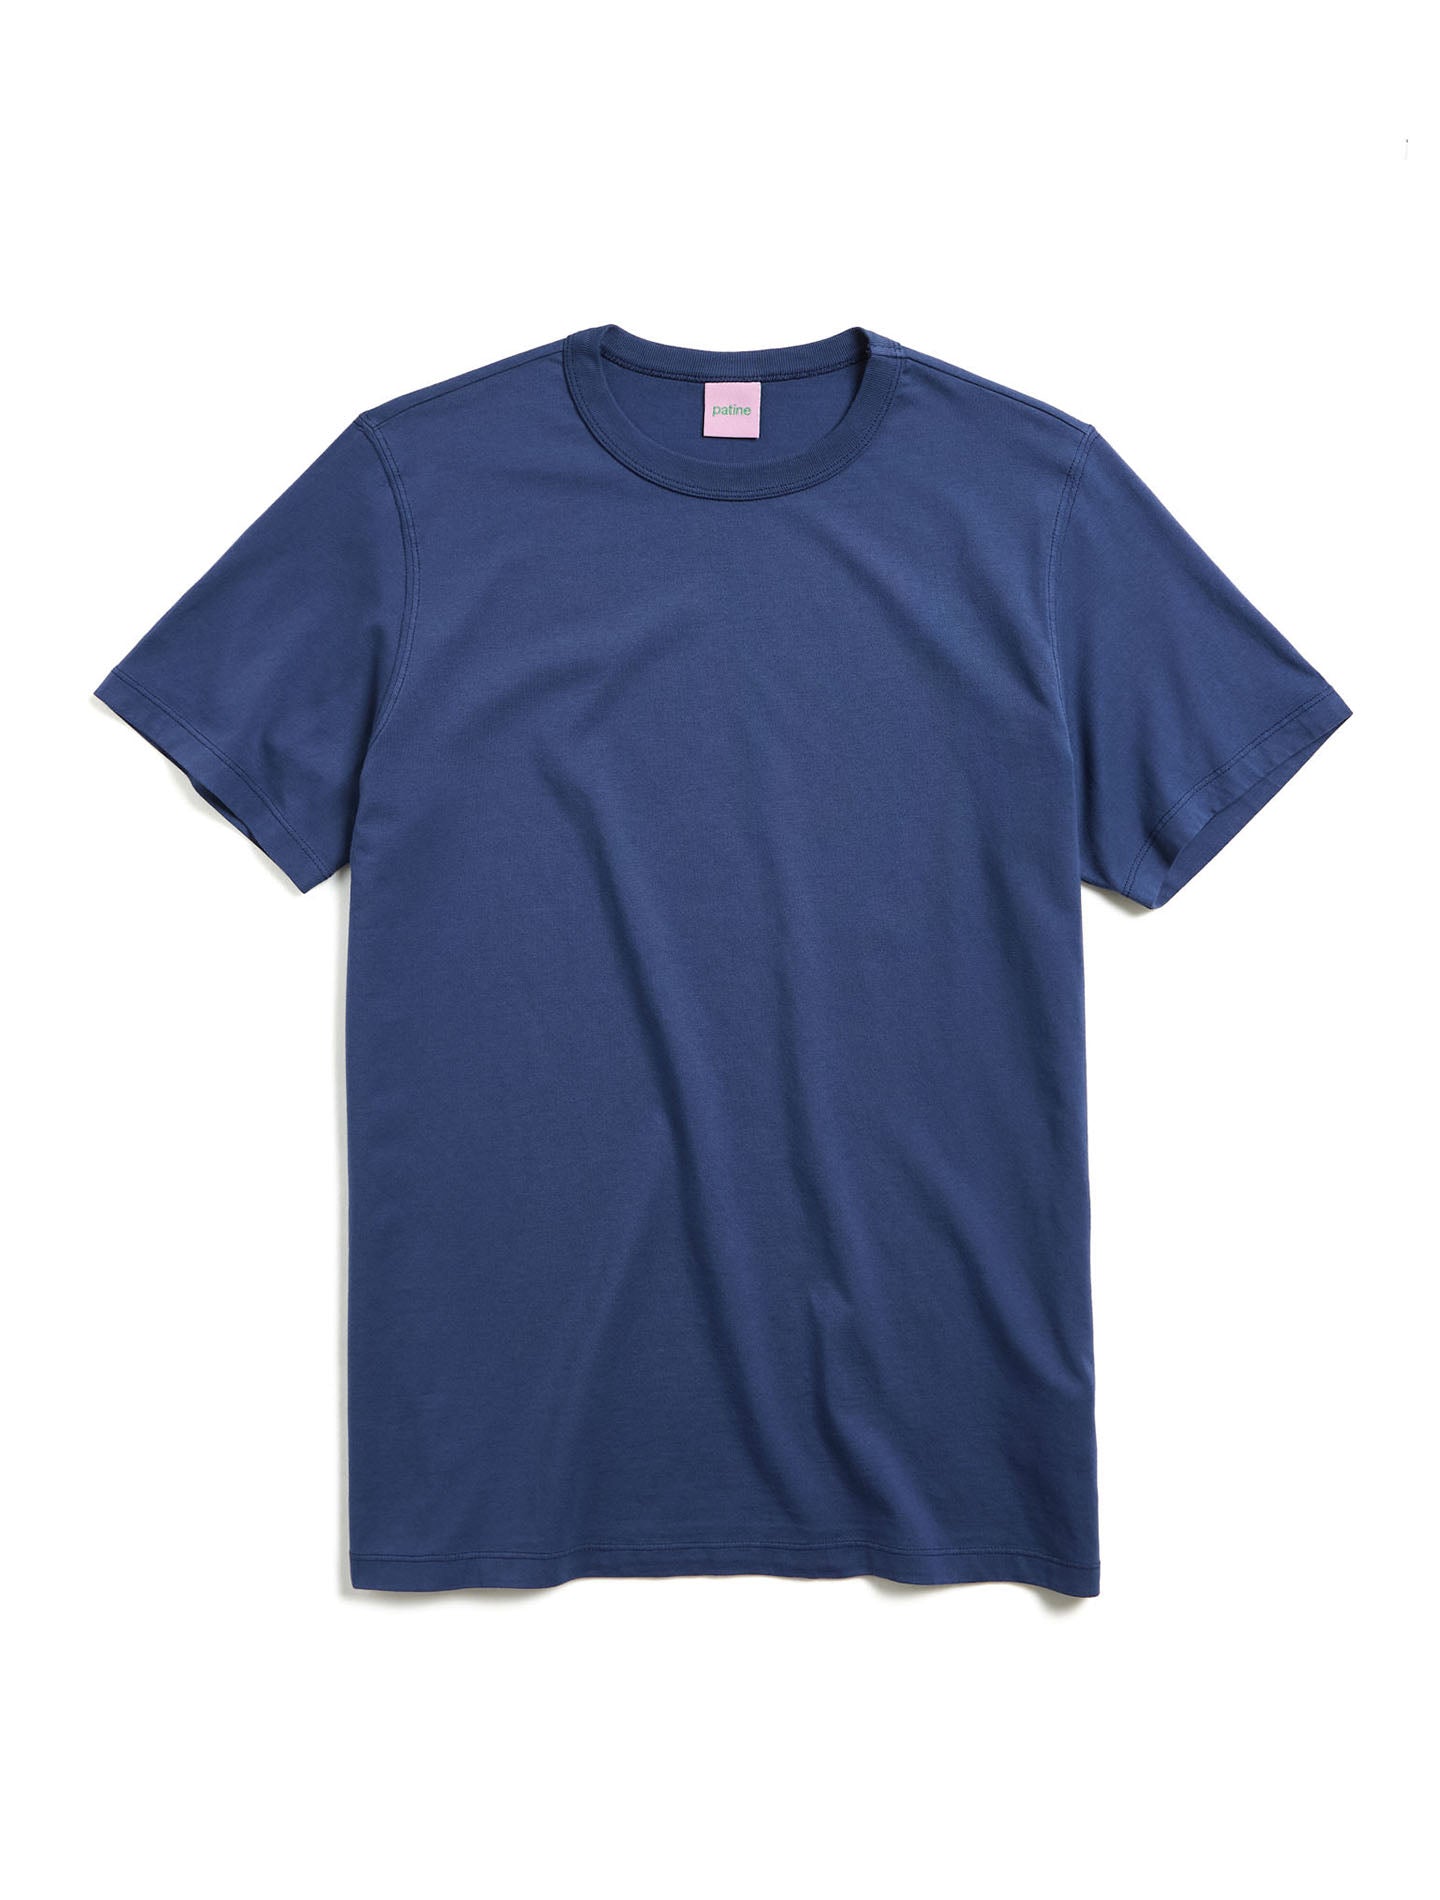 Le tee-shirt Classic Willie® jersey bio-recyclé Bleu navy